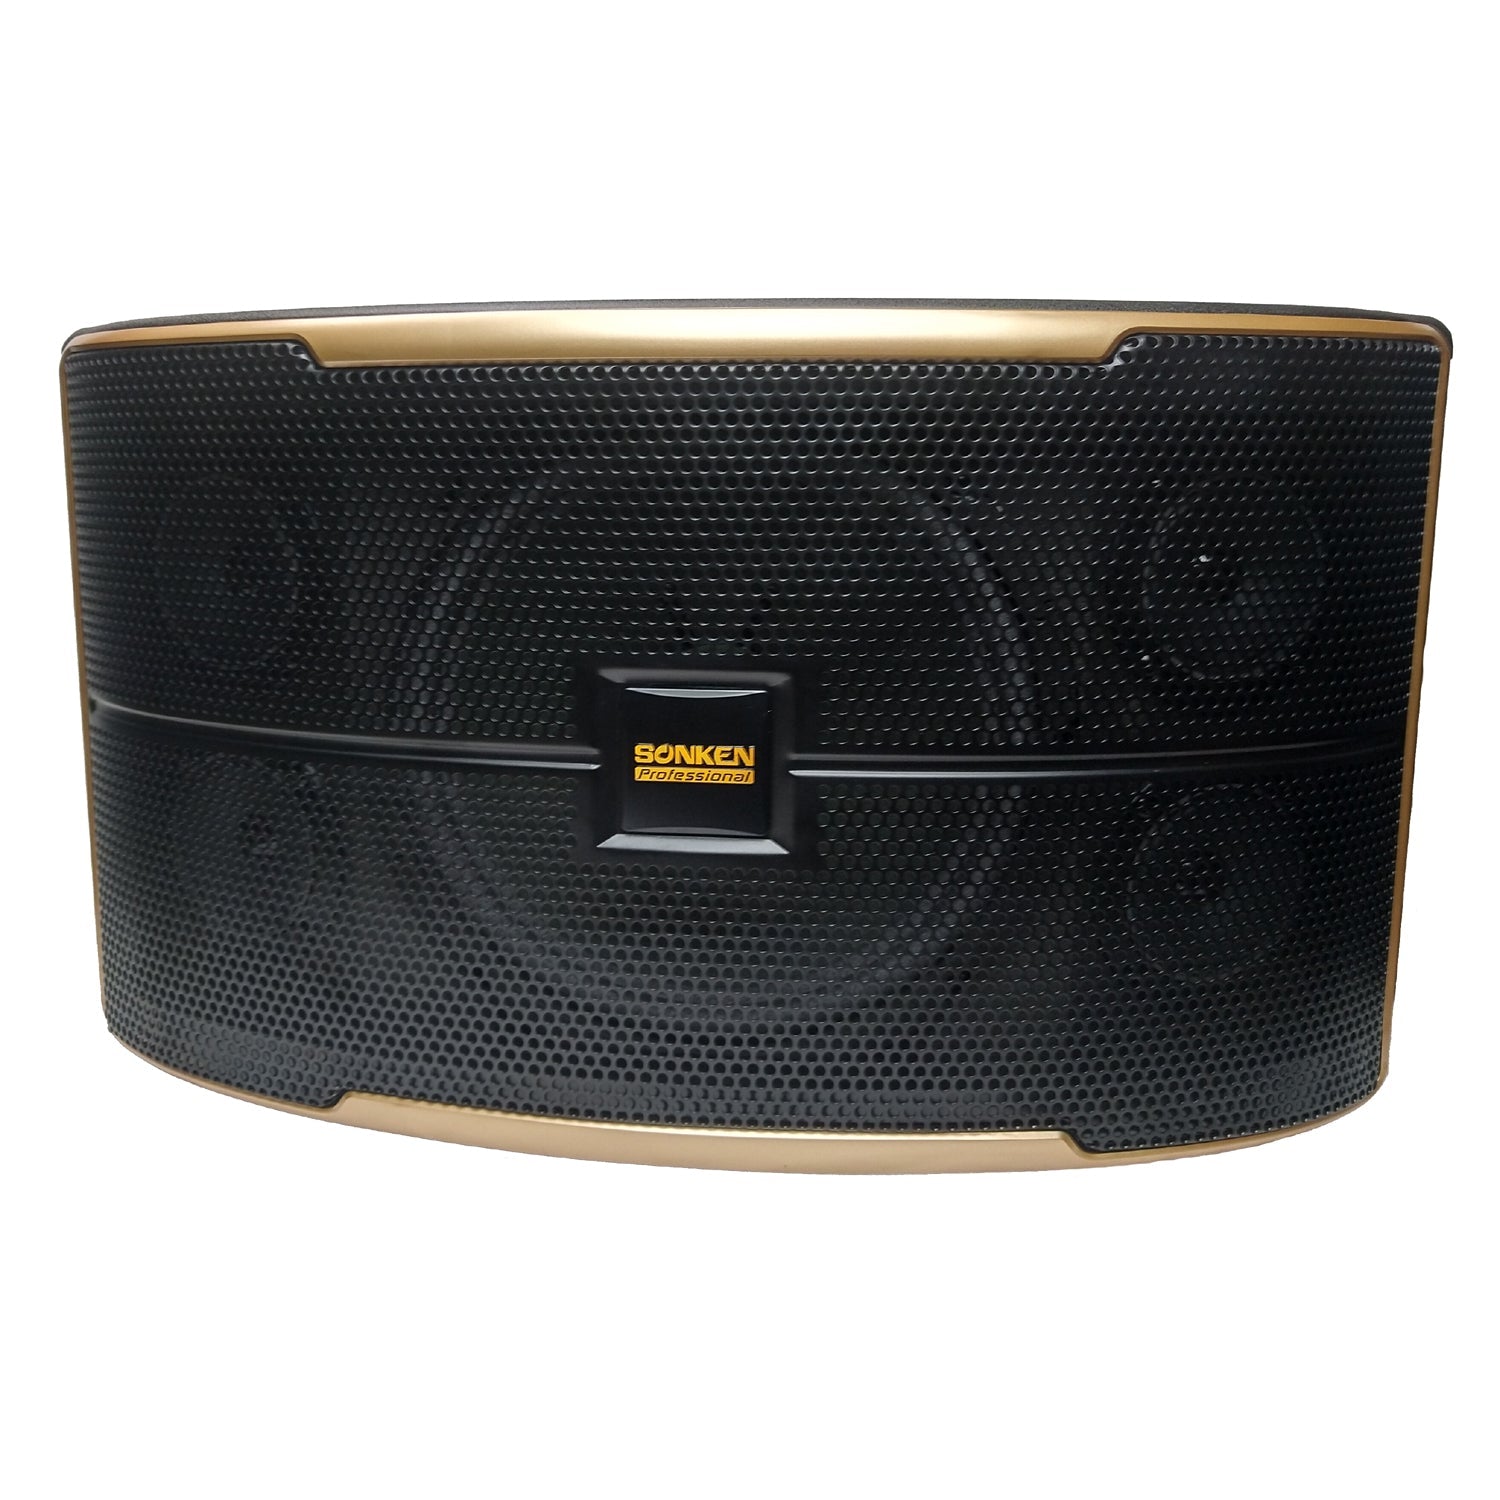 Sonken Home Karaoke Studio Package Deal (SA-767 Amp + CS-600 (10") Speakers + WM-800D Wireless Mics) - Karaoke Home Entertainment